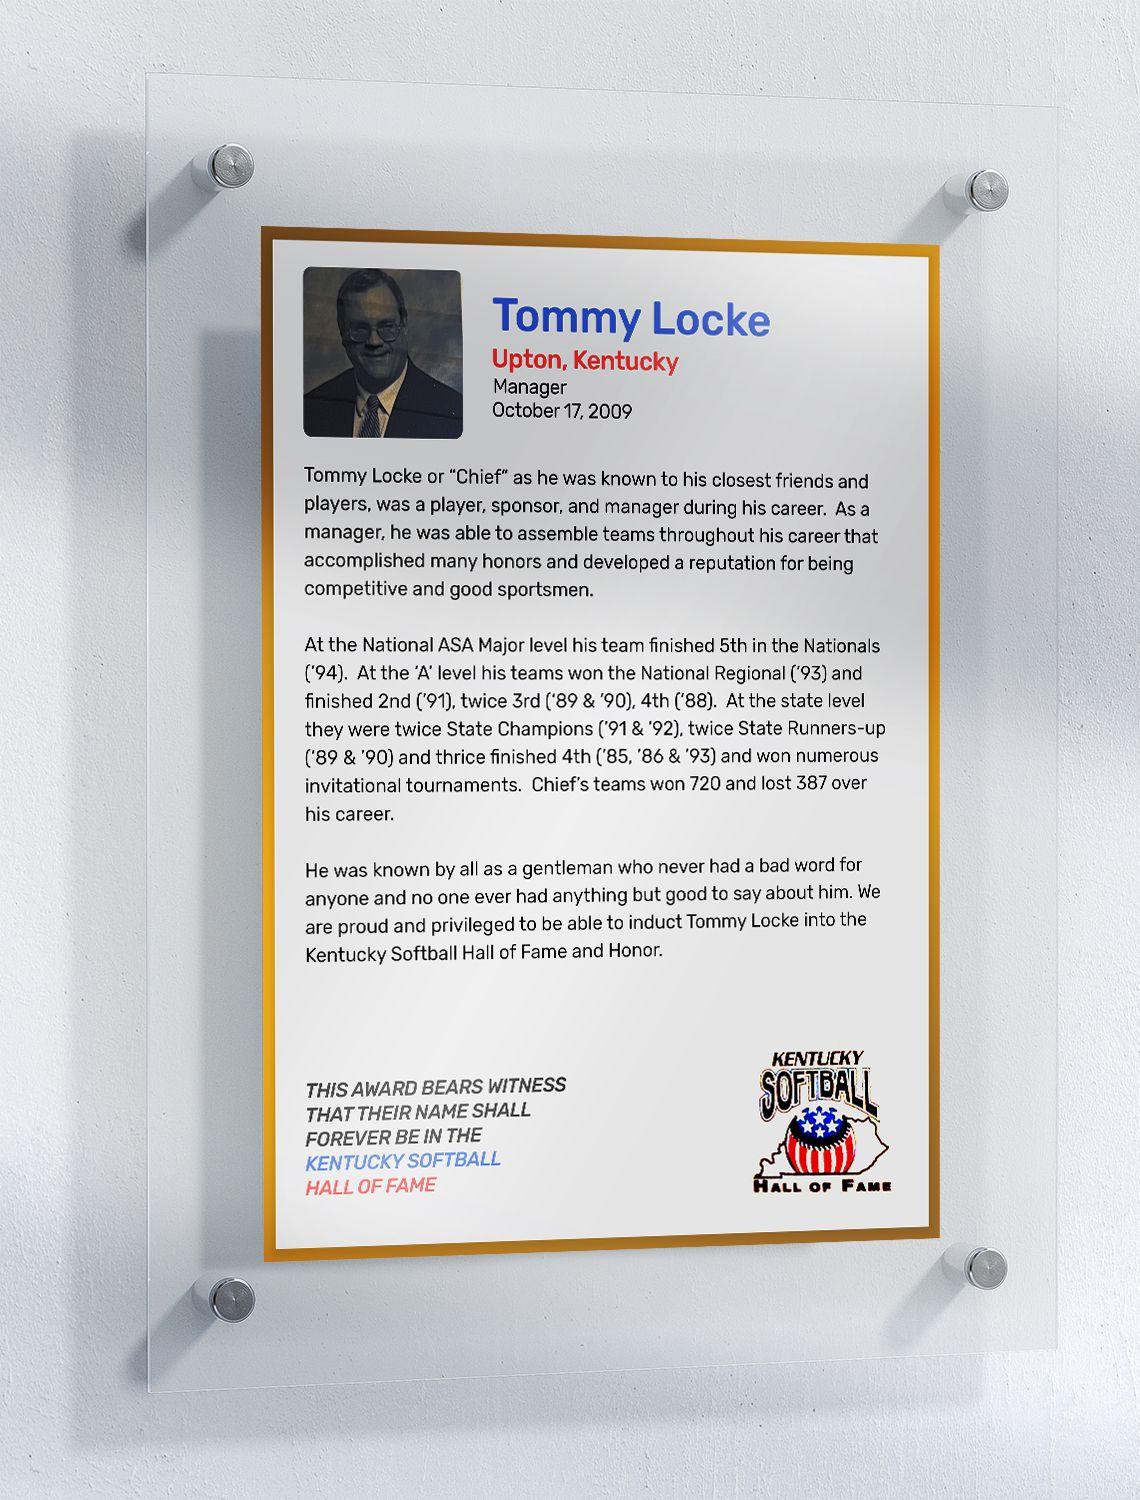 Locke, Tommy